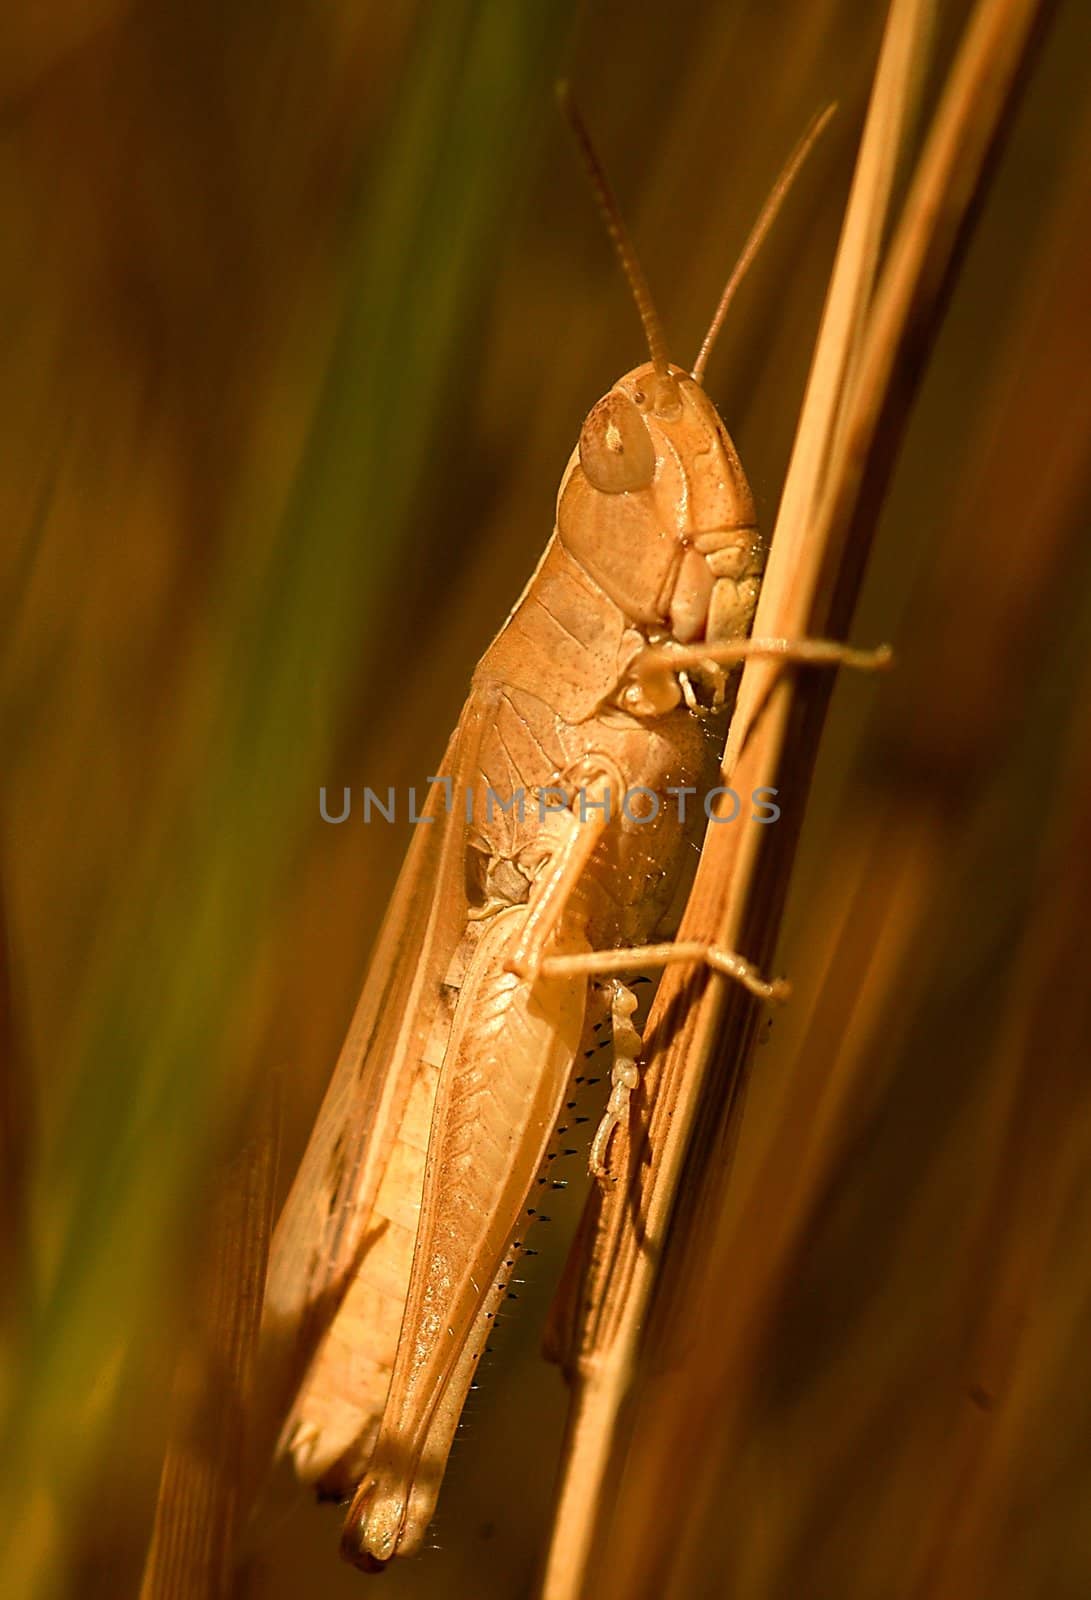 Grasshopper by kobby_dagan